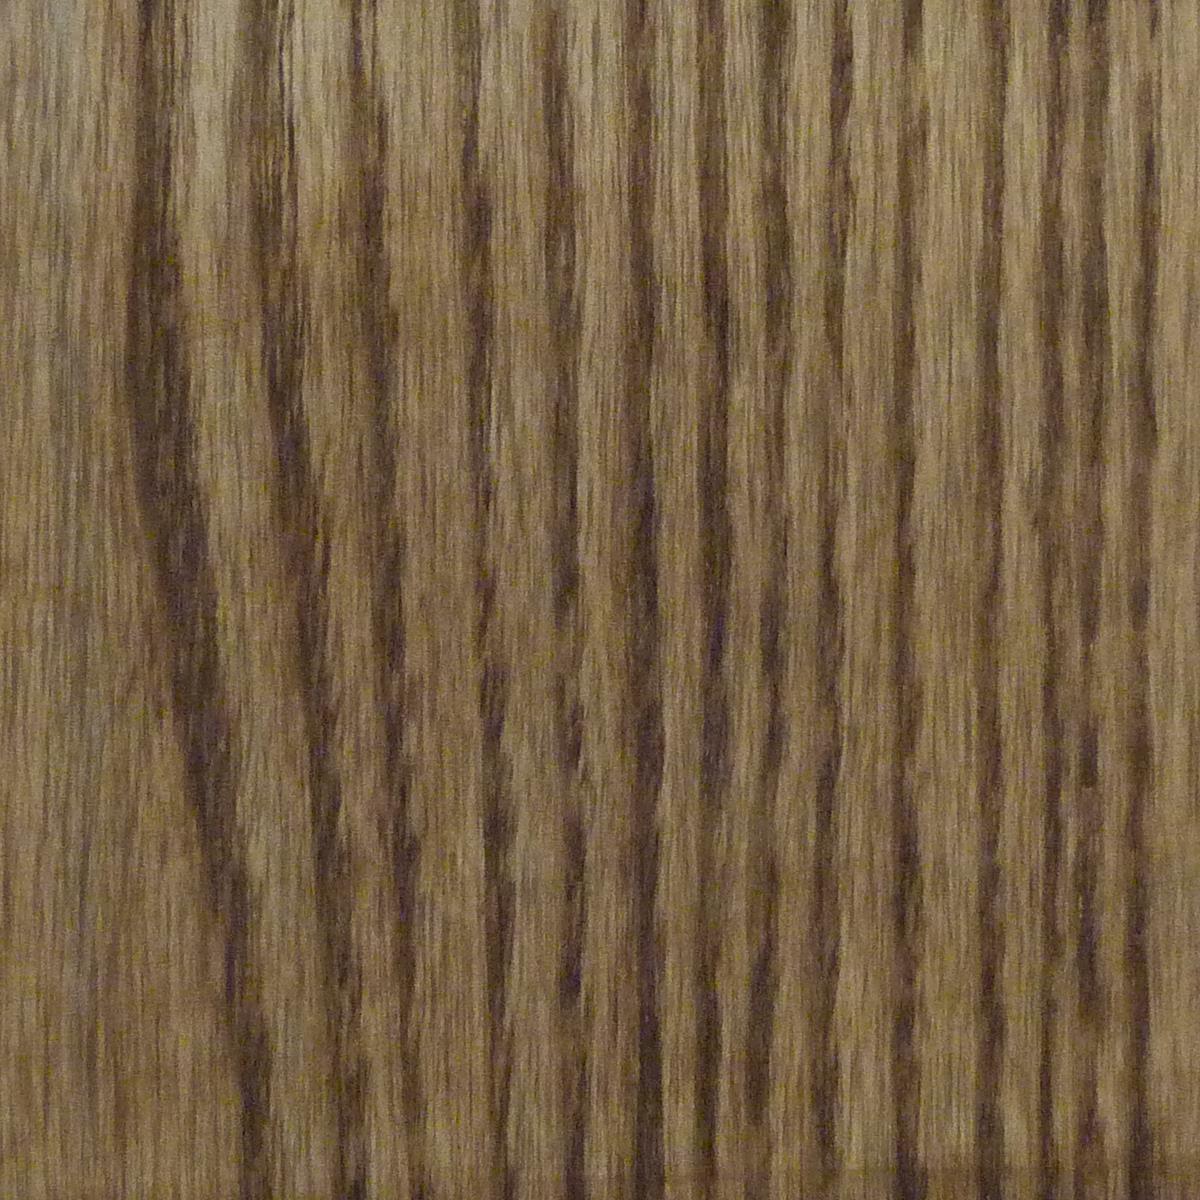 dartfords Walnut Interior Spirit Based Wood Dye - 1 litre Tin